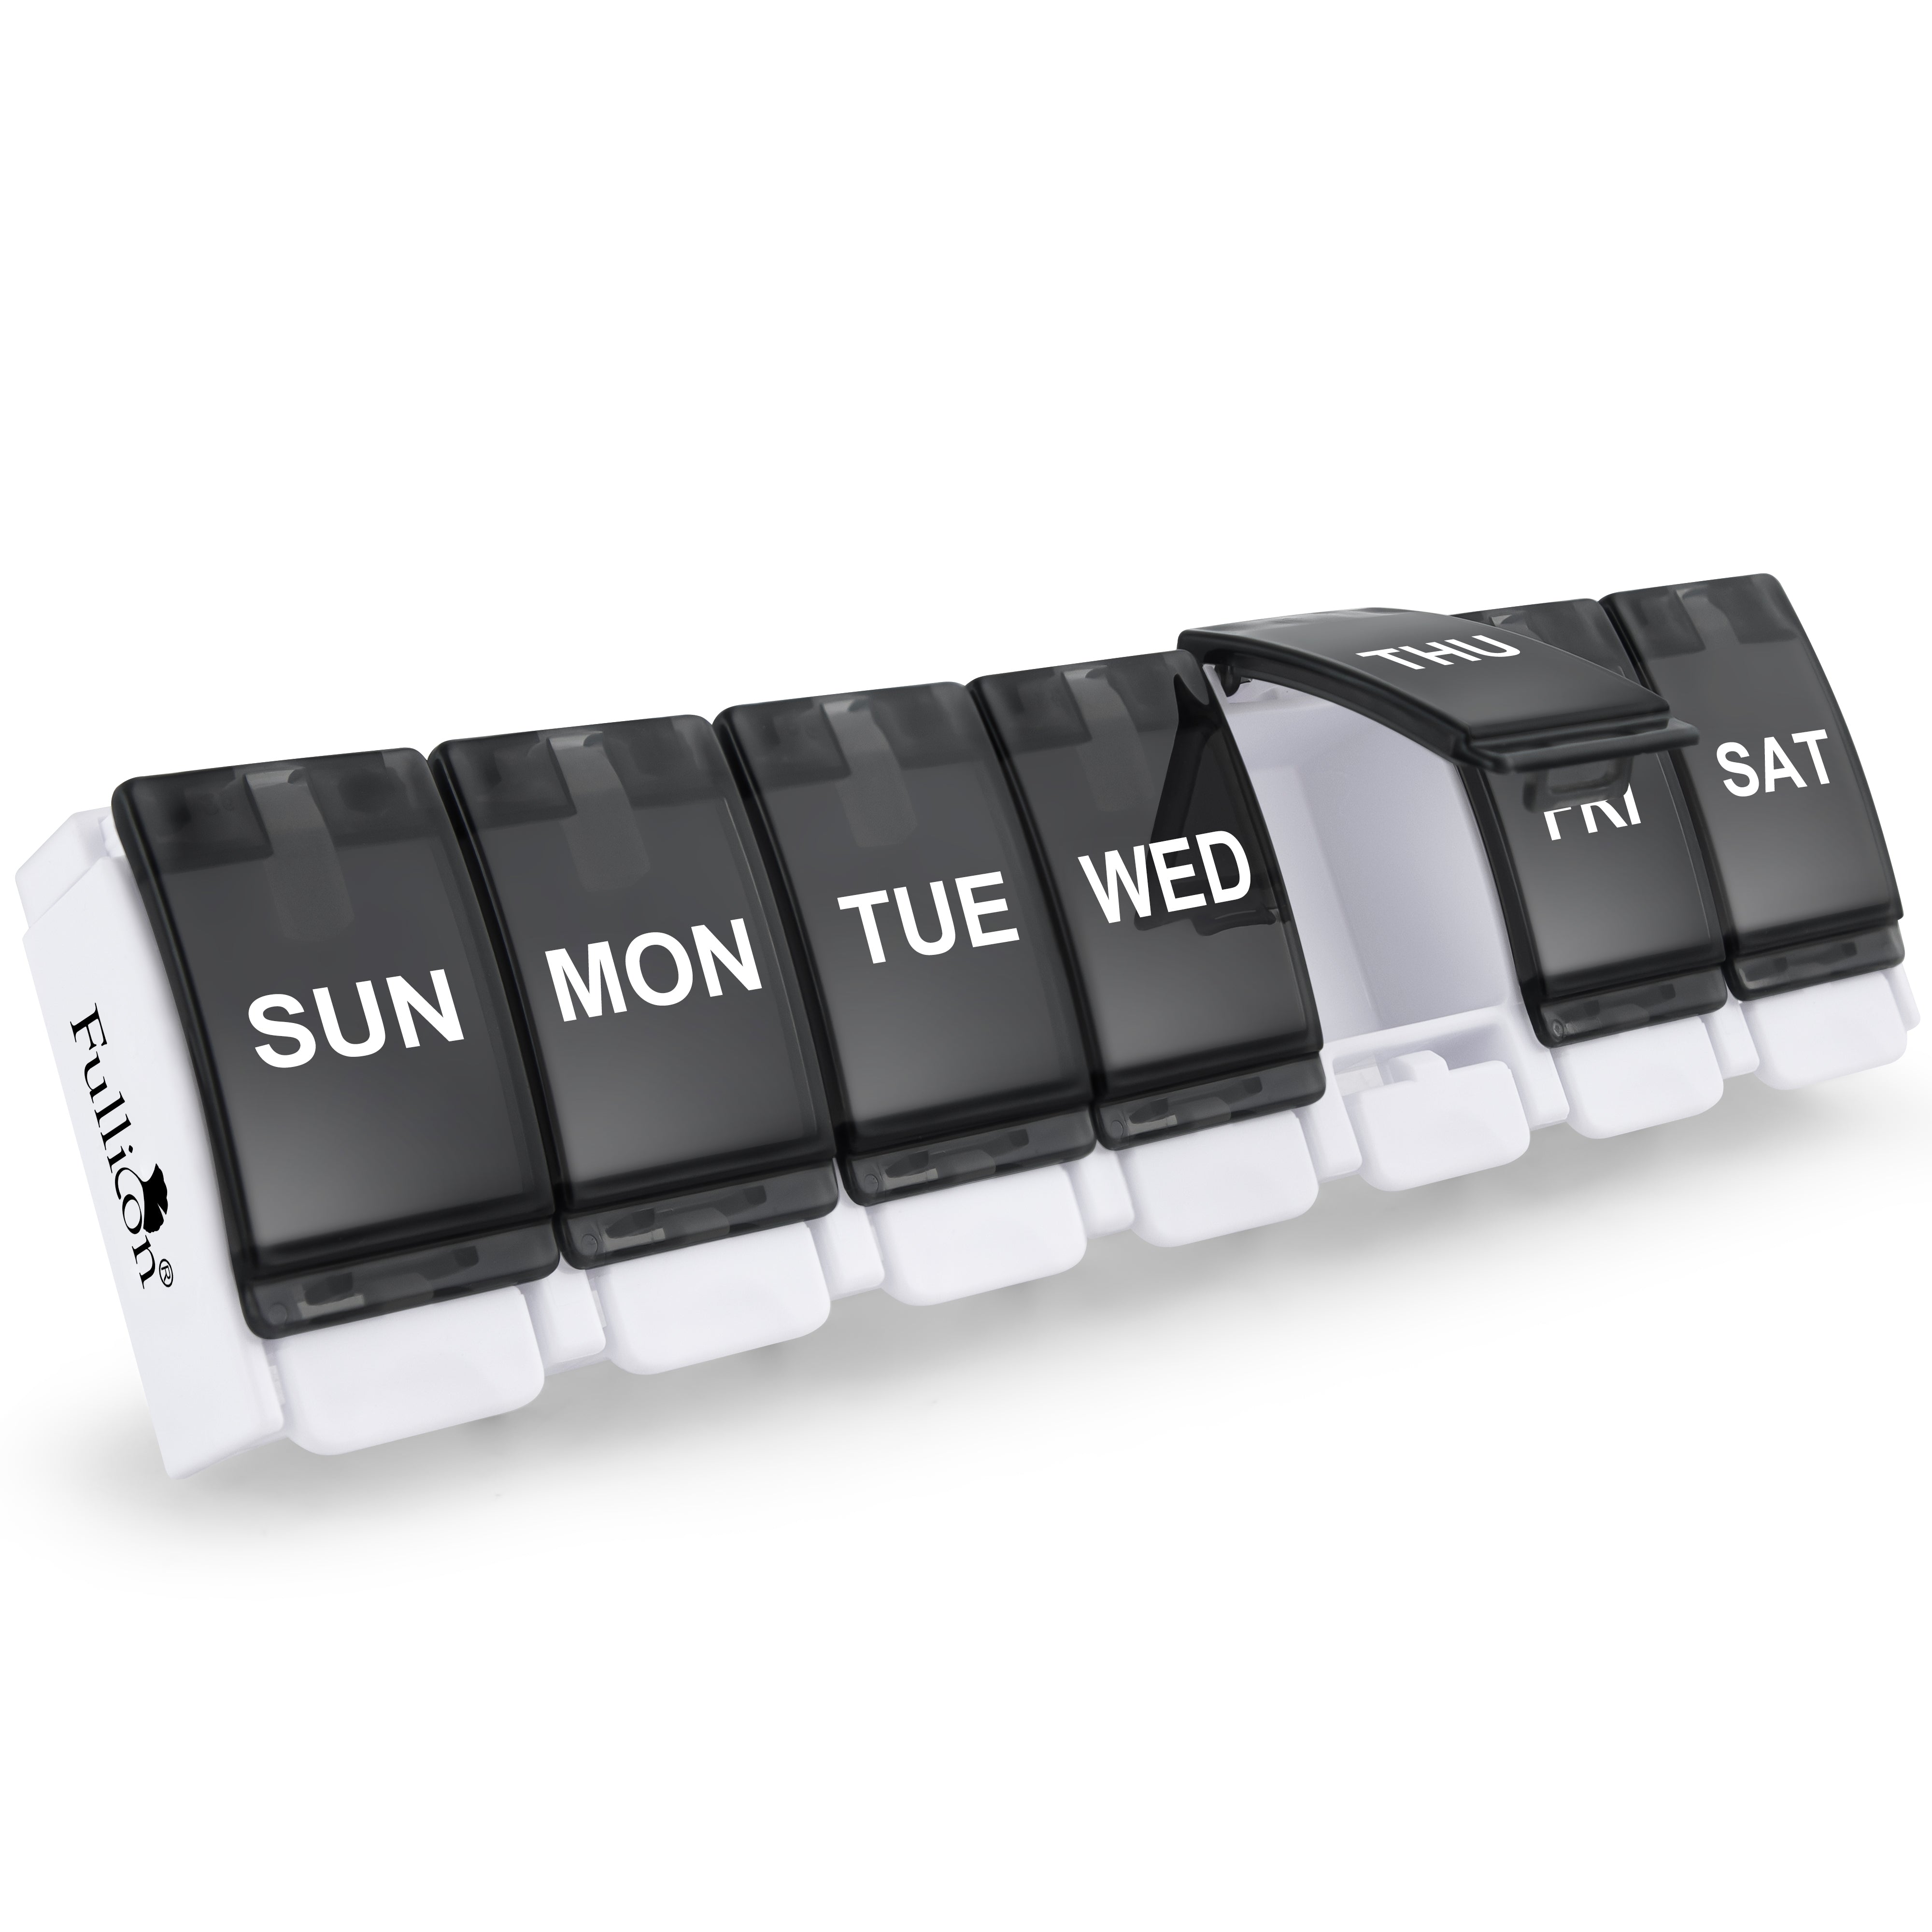 Portable Moisture Proof Travel Pill Organizer Oversize Black Fullicon